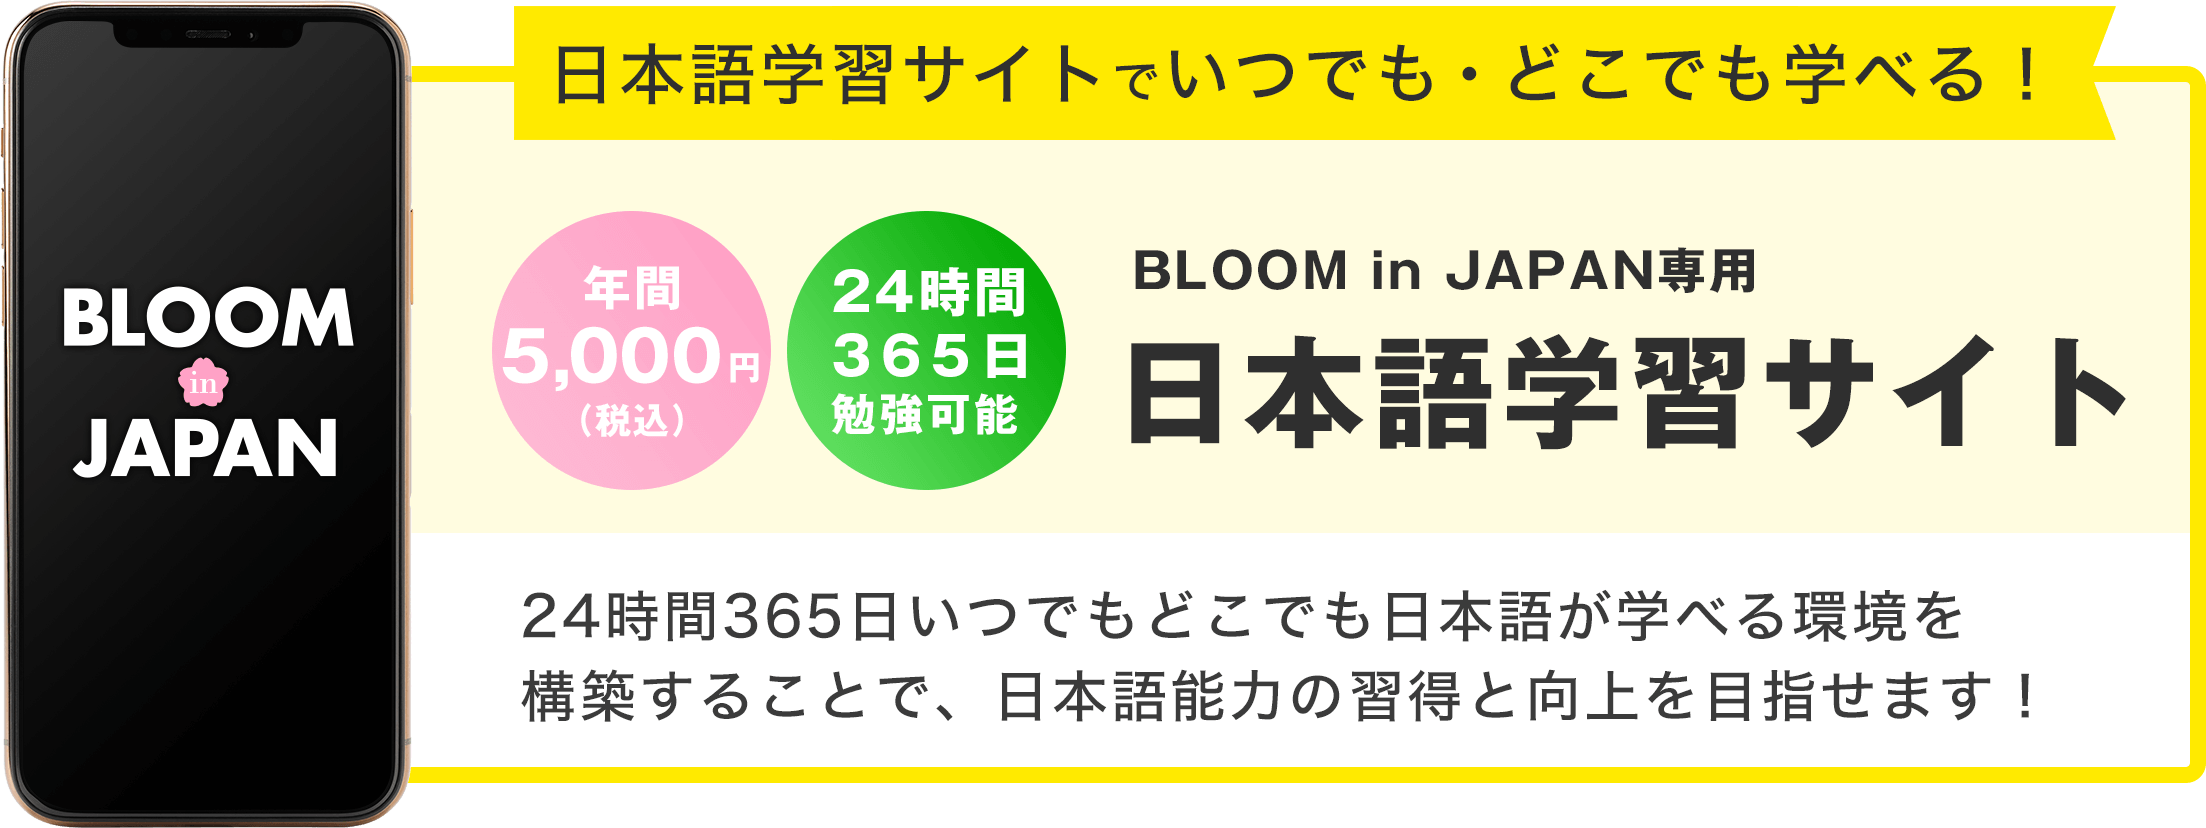 BLOOM in JAPAN専用日本語学習サイト